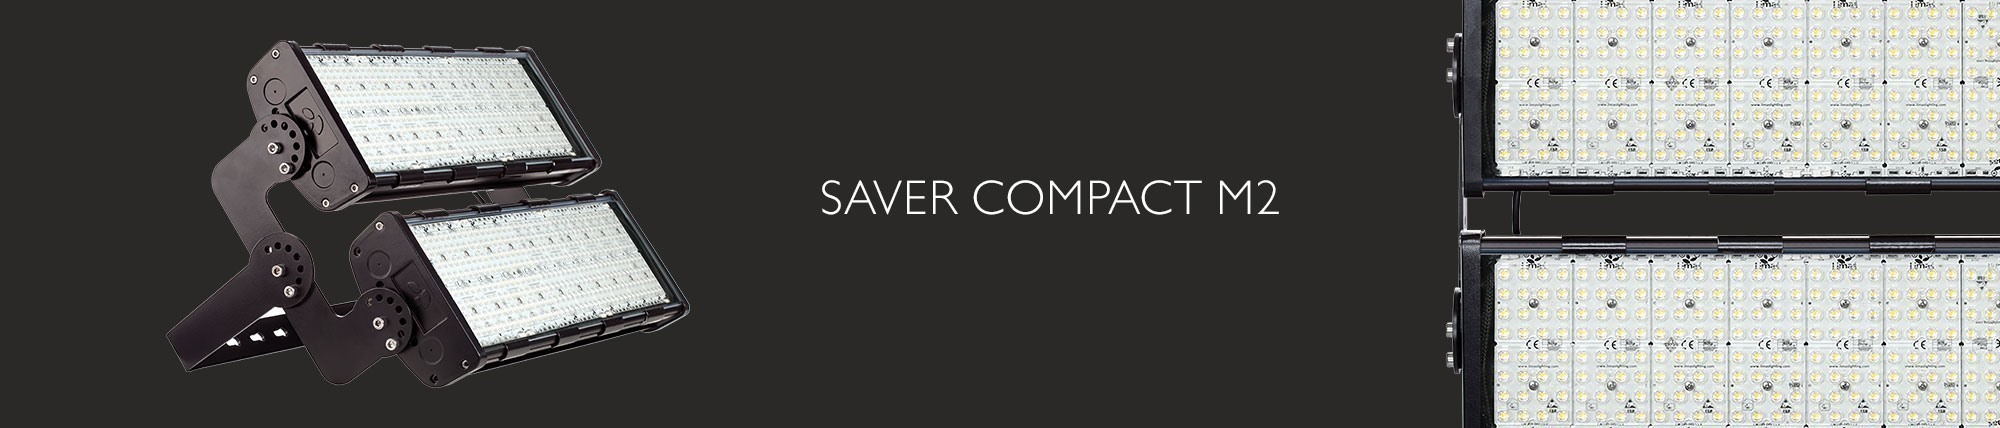 Saver Compact M2